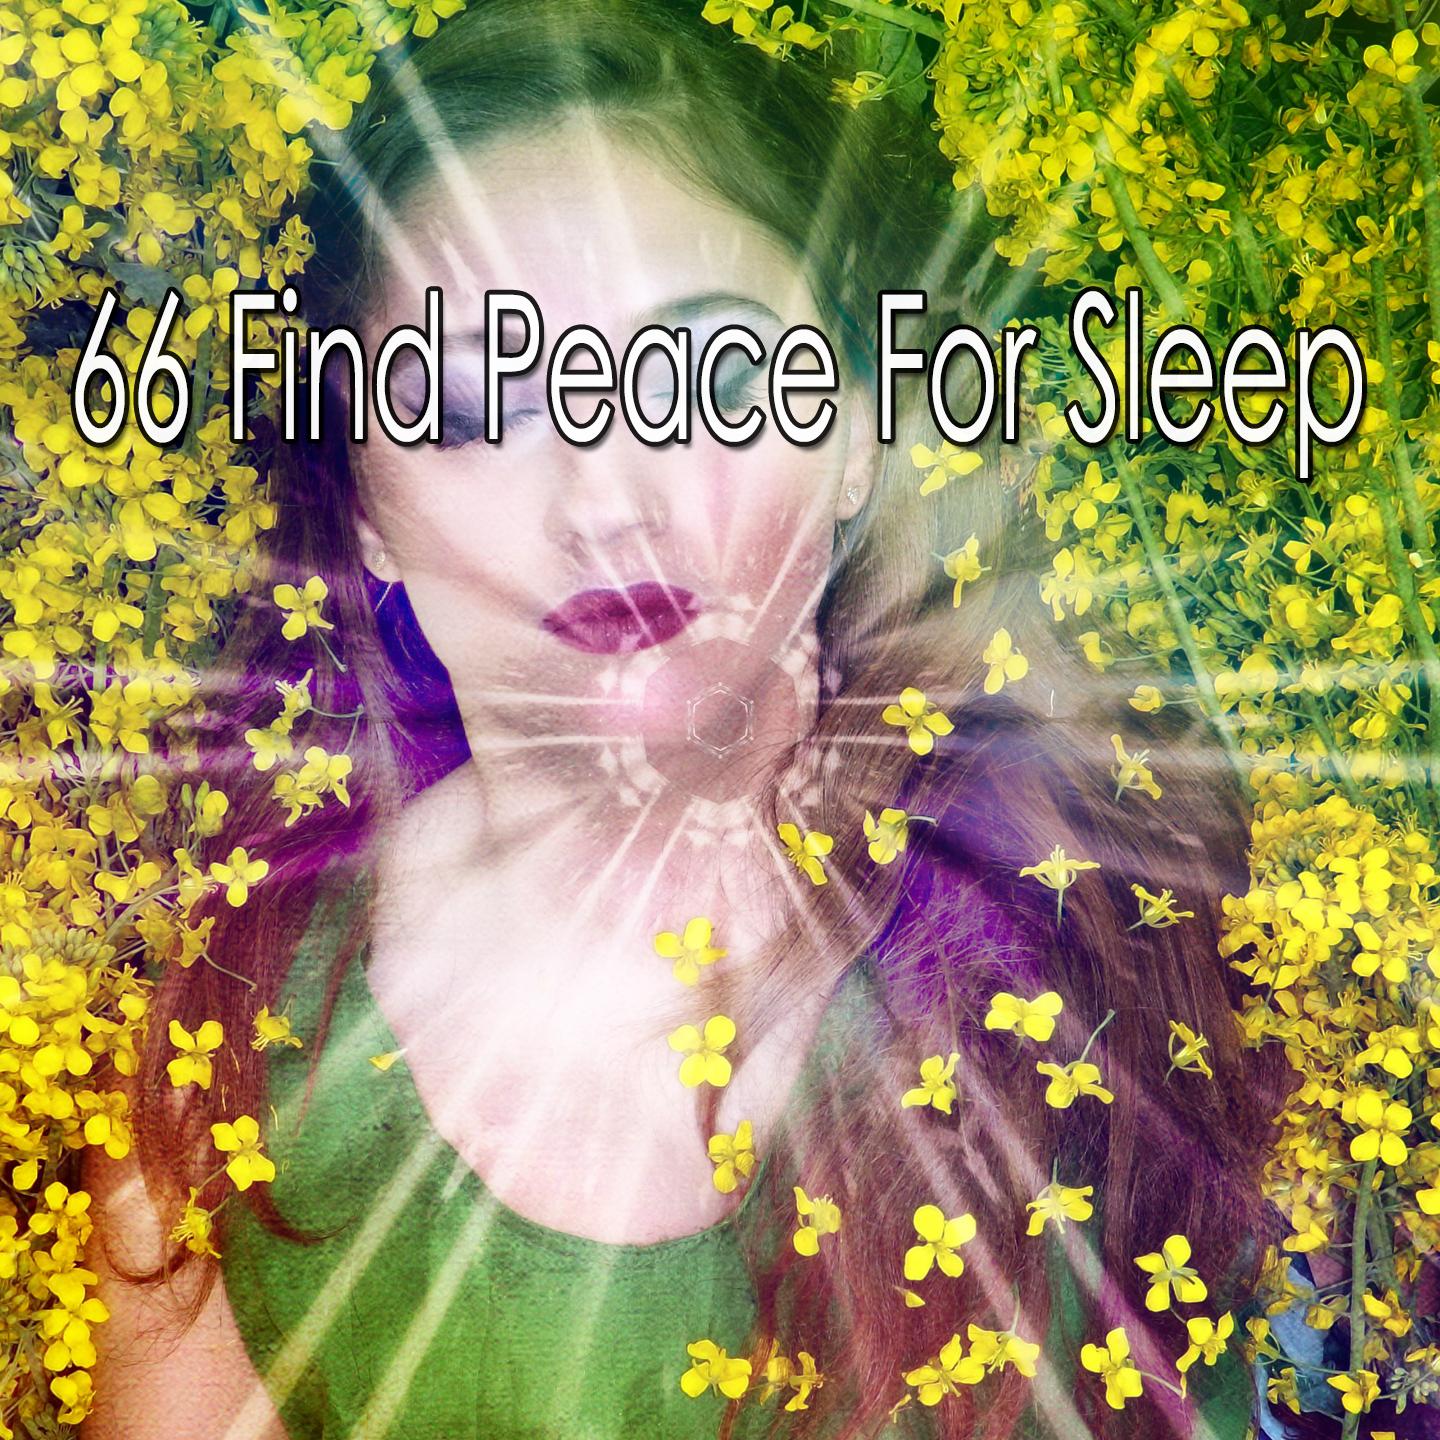 66 Find Peace for Sleep